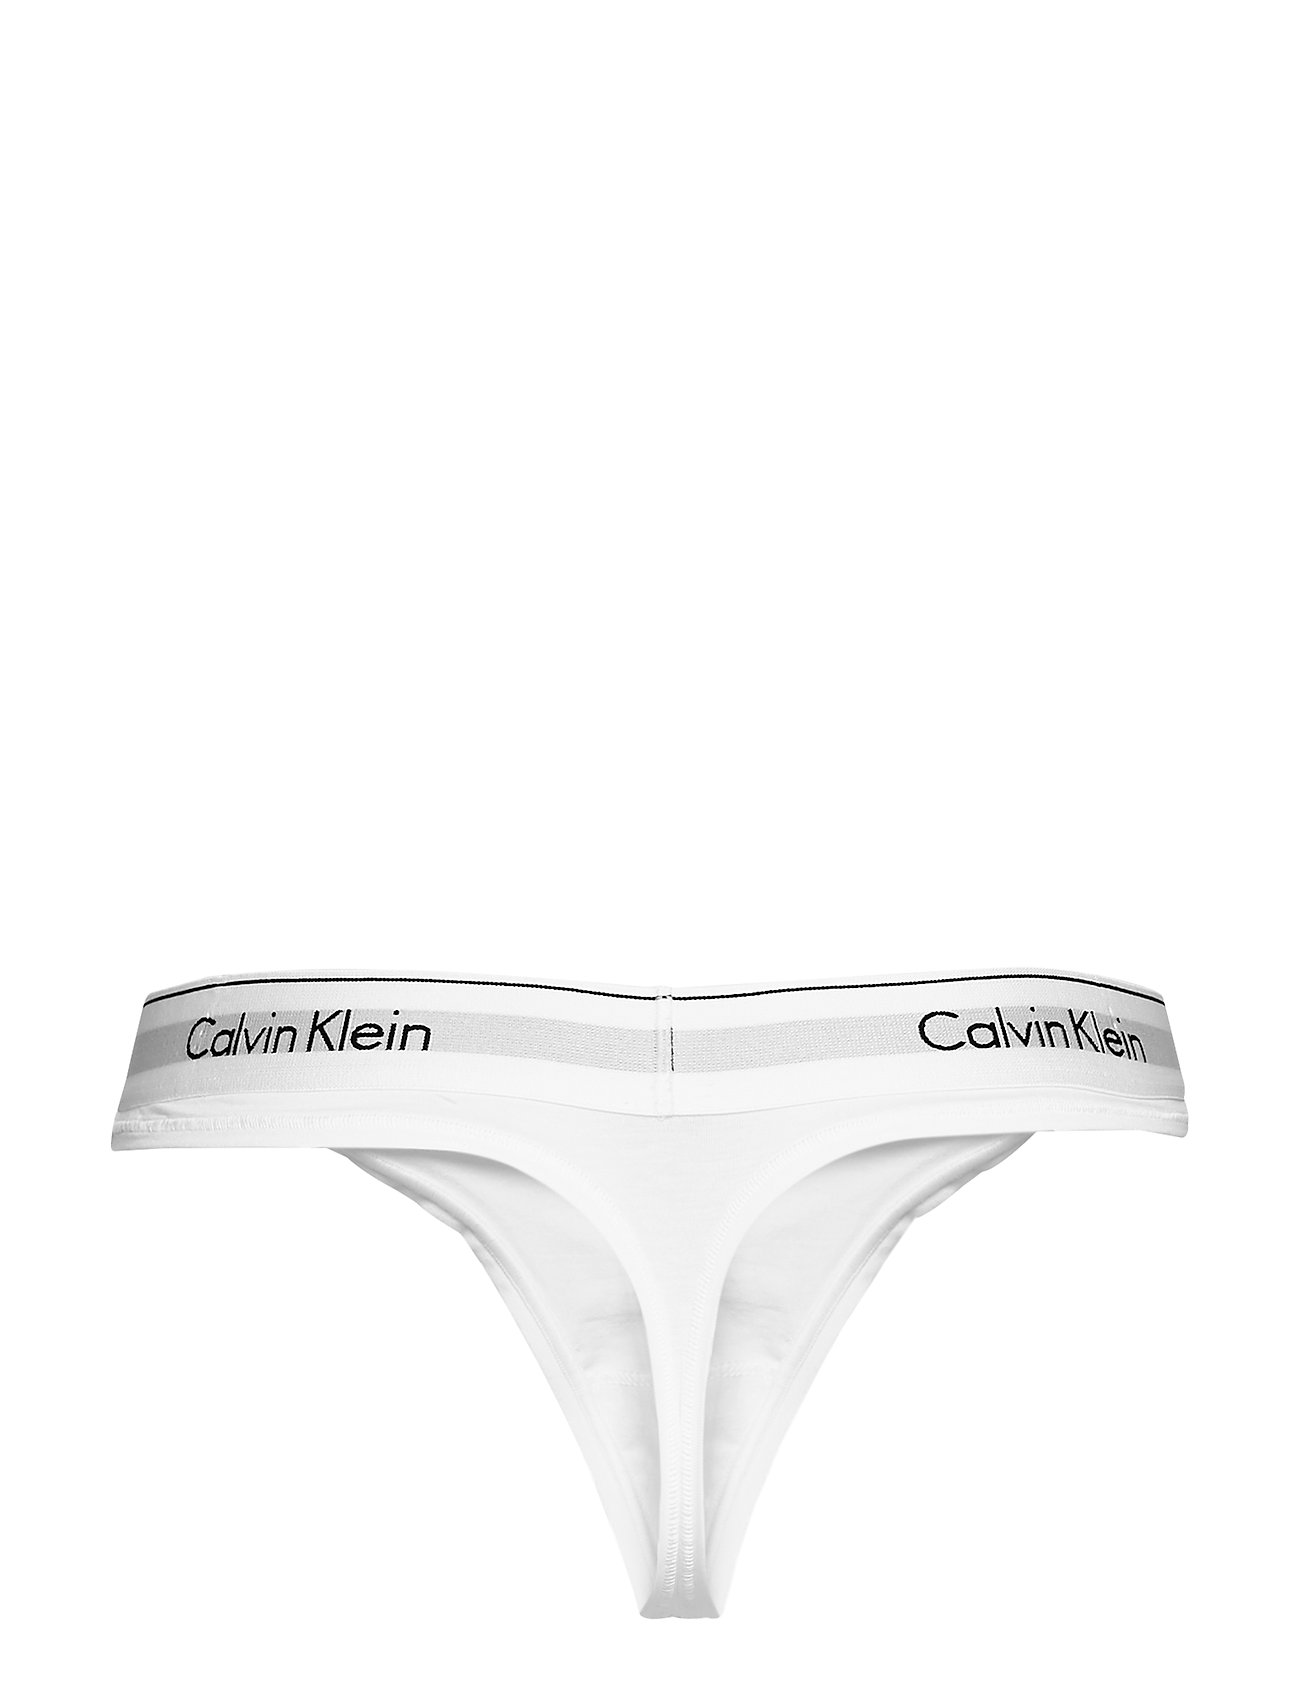 Thong G-streng UndertÃ¸j Hvid Calvin Klein